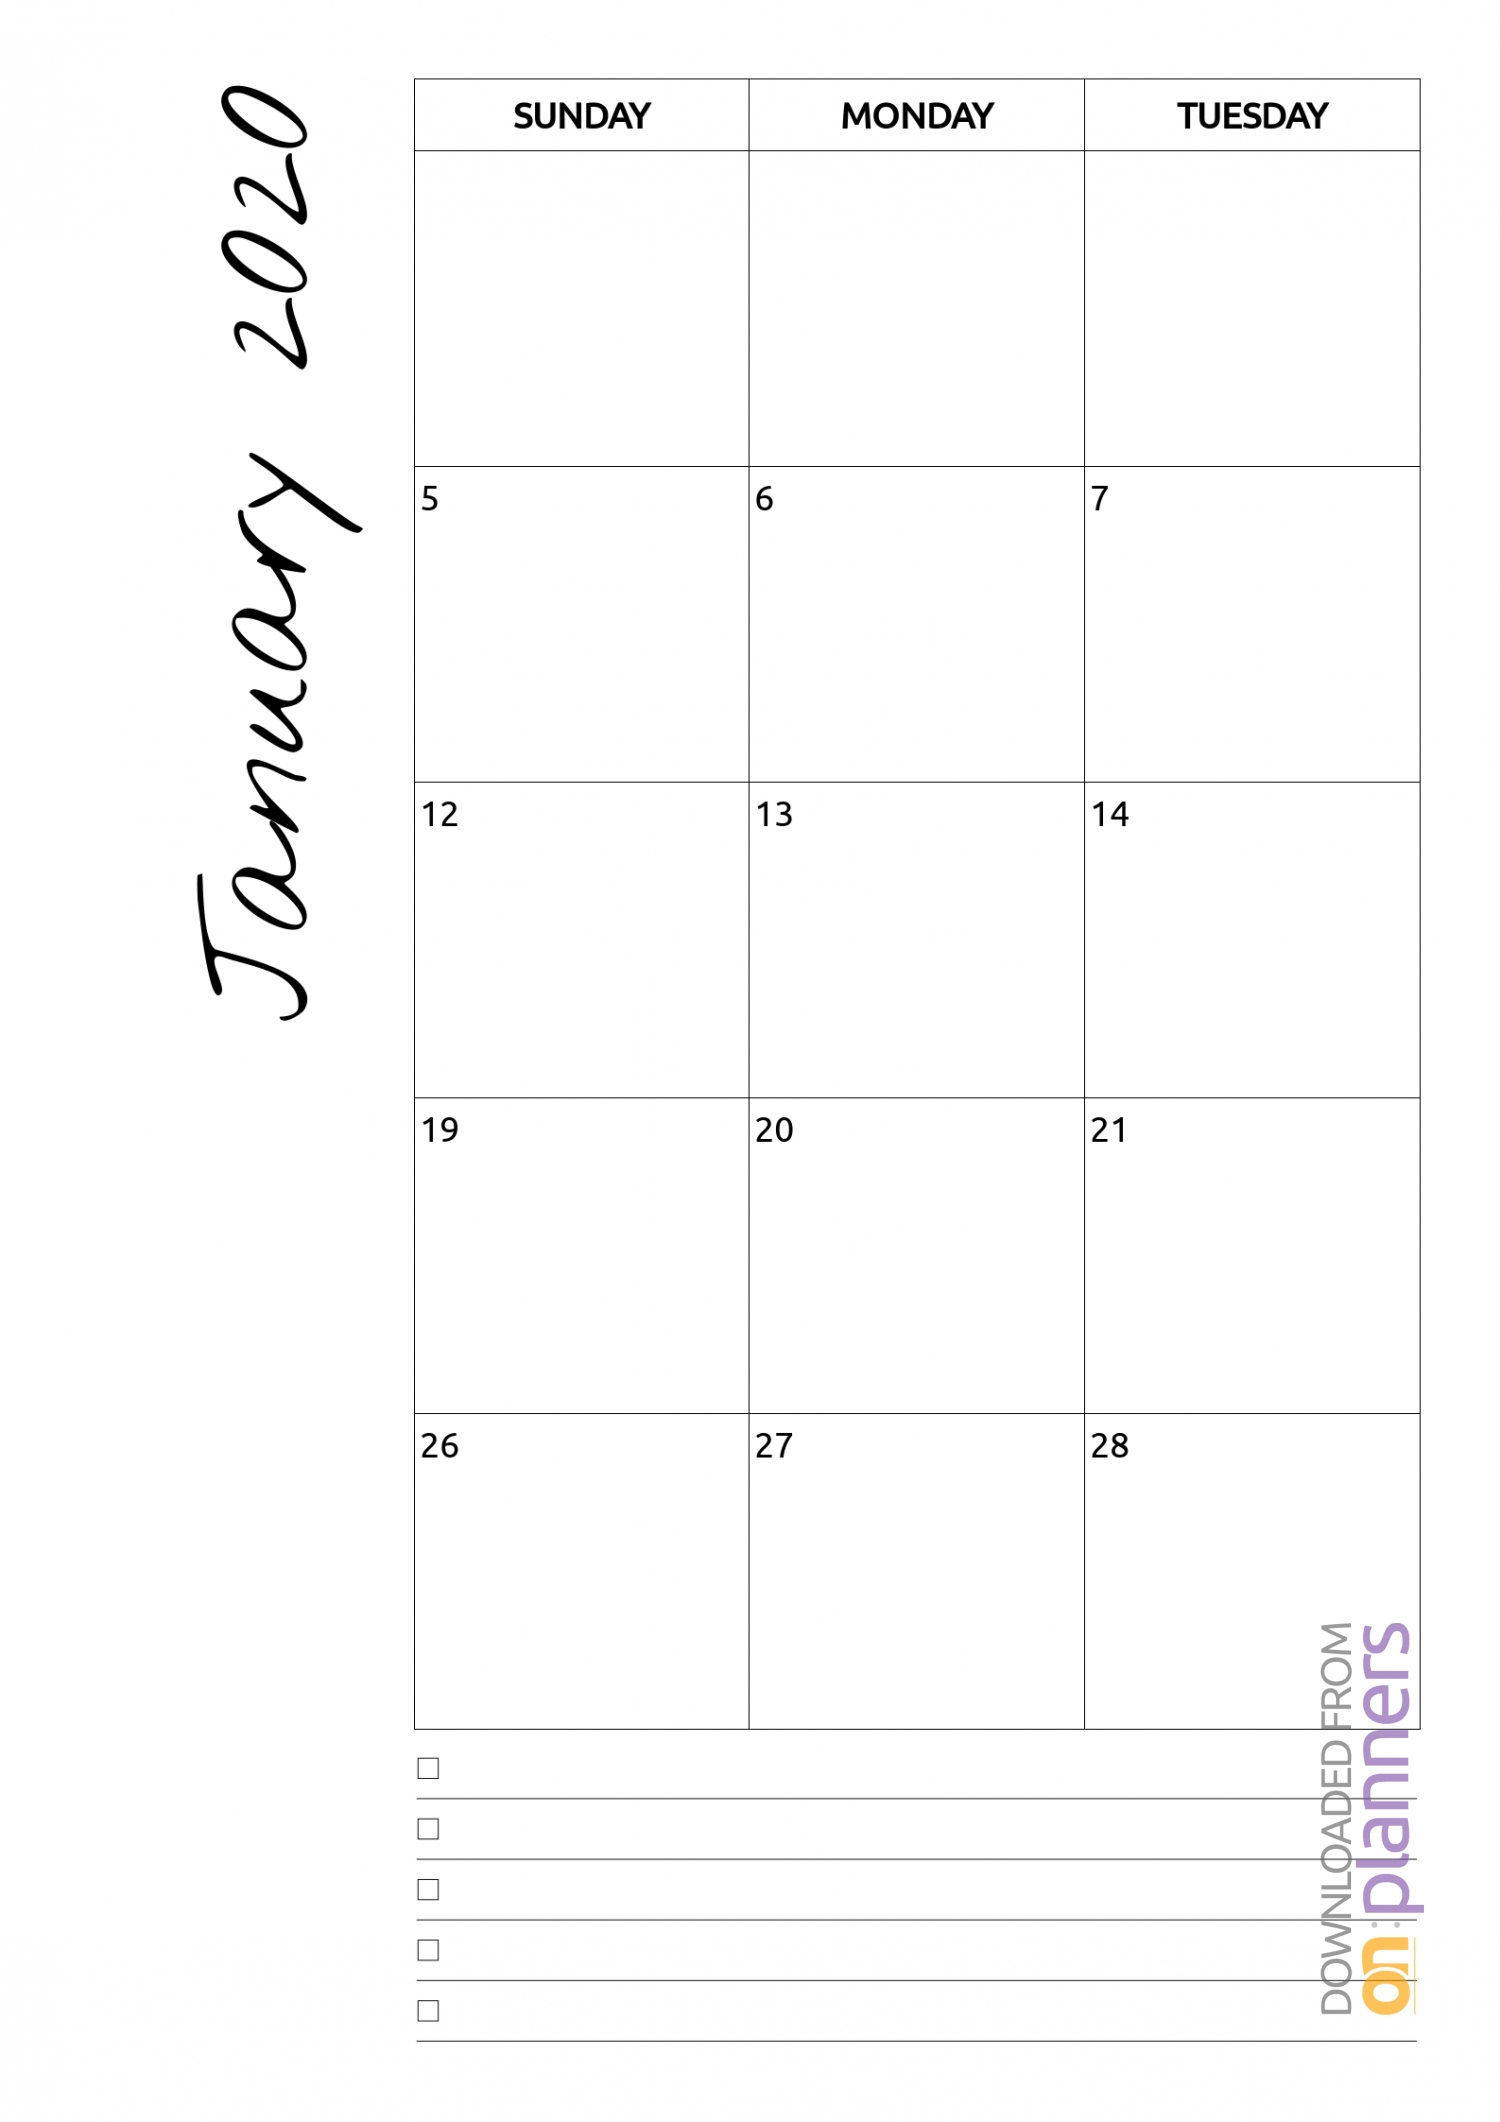 Printable Monthly Calendar Sunday To Saturday No Dates Schedule To Print Sunday To Saturday